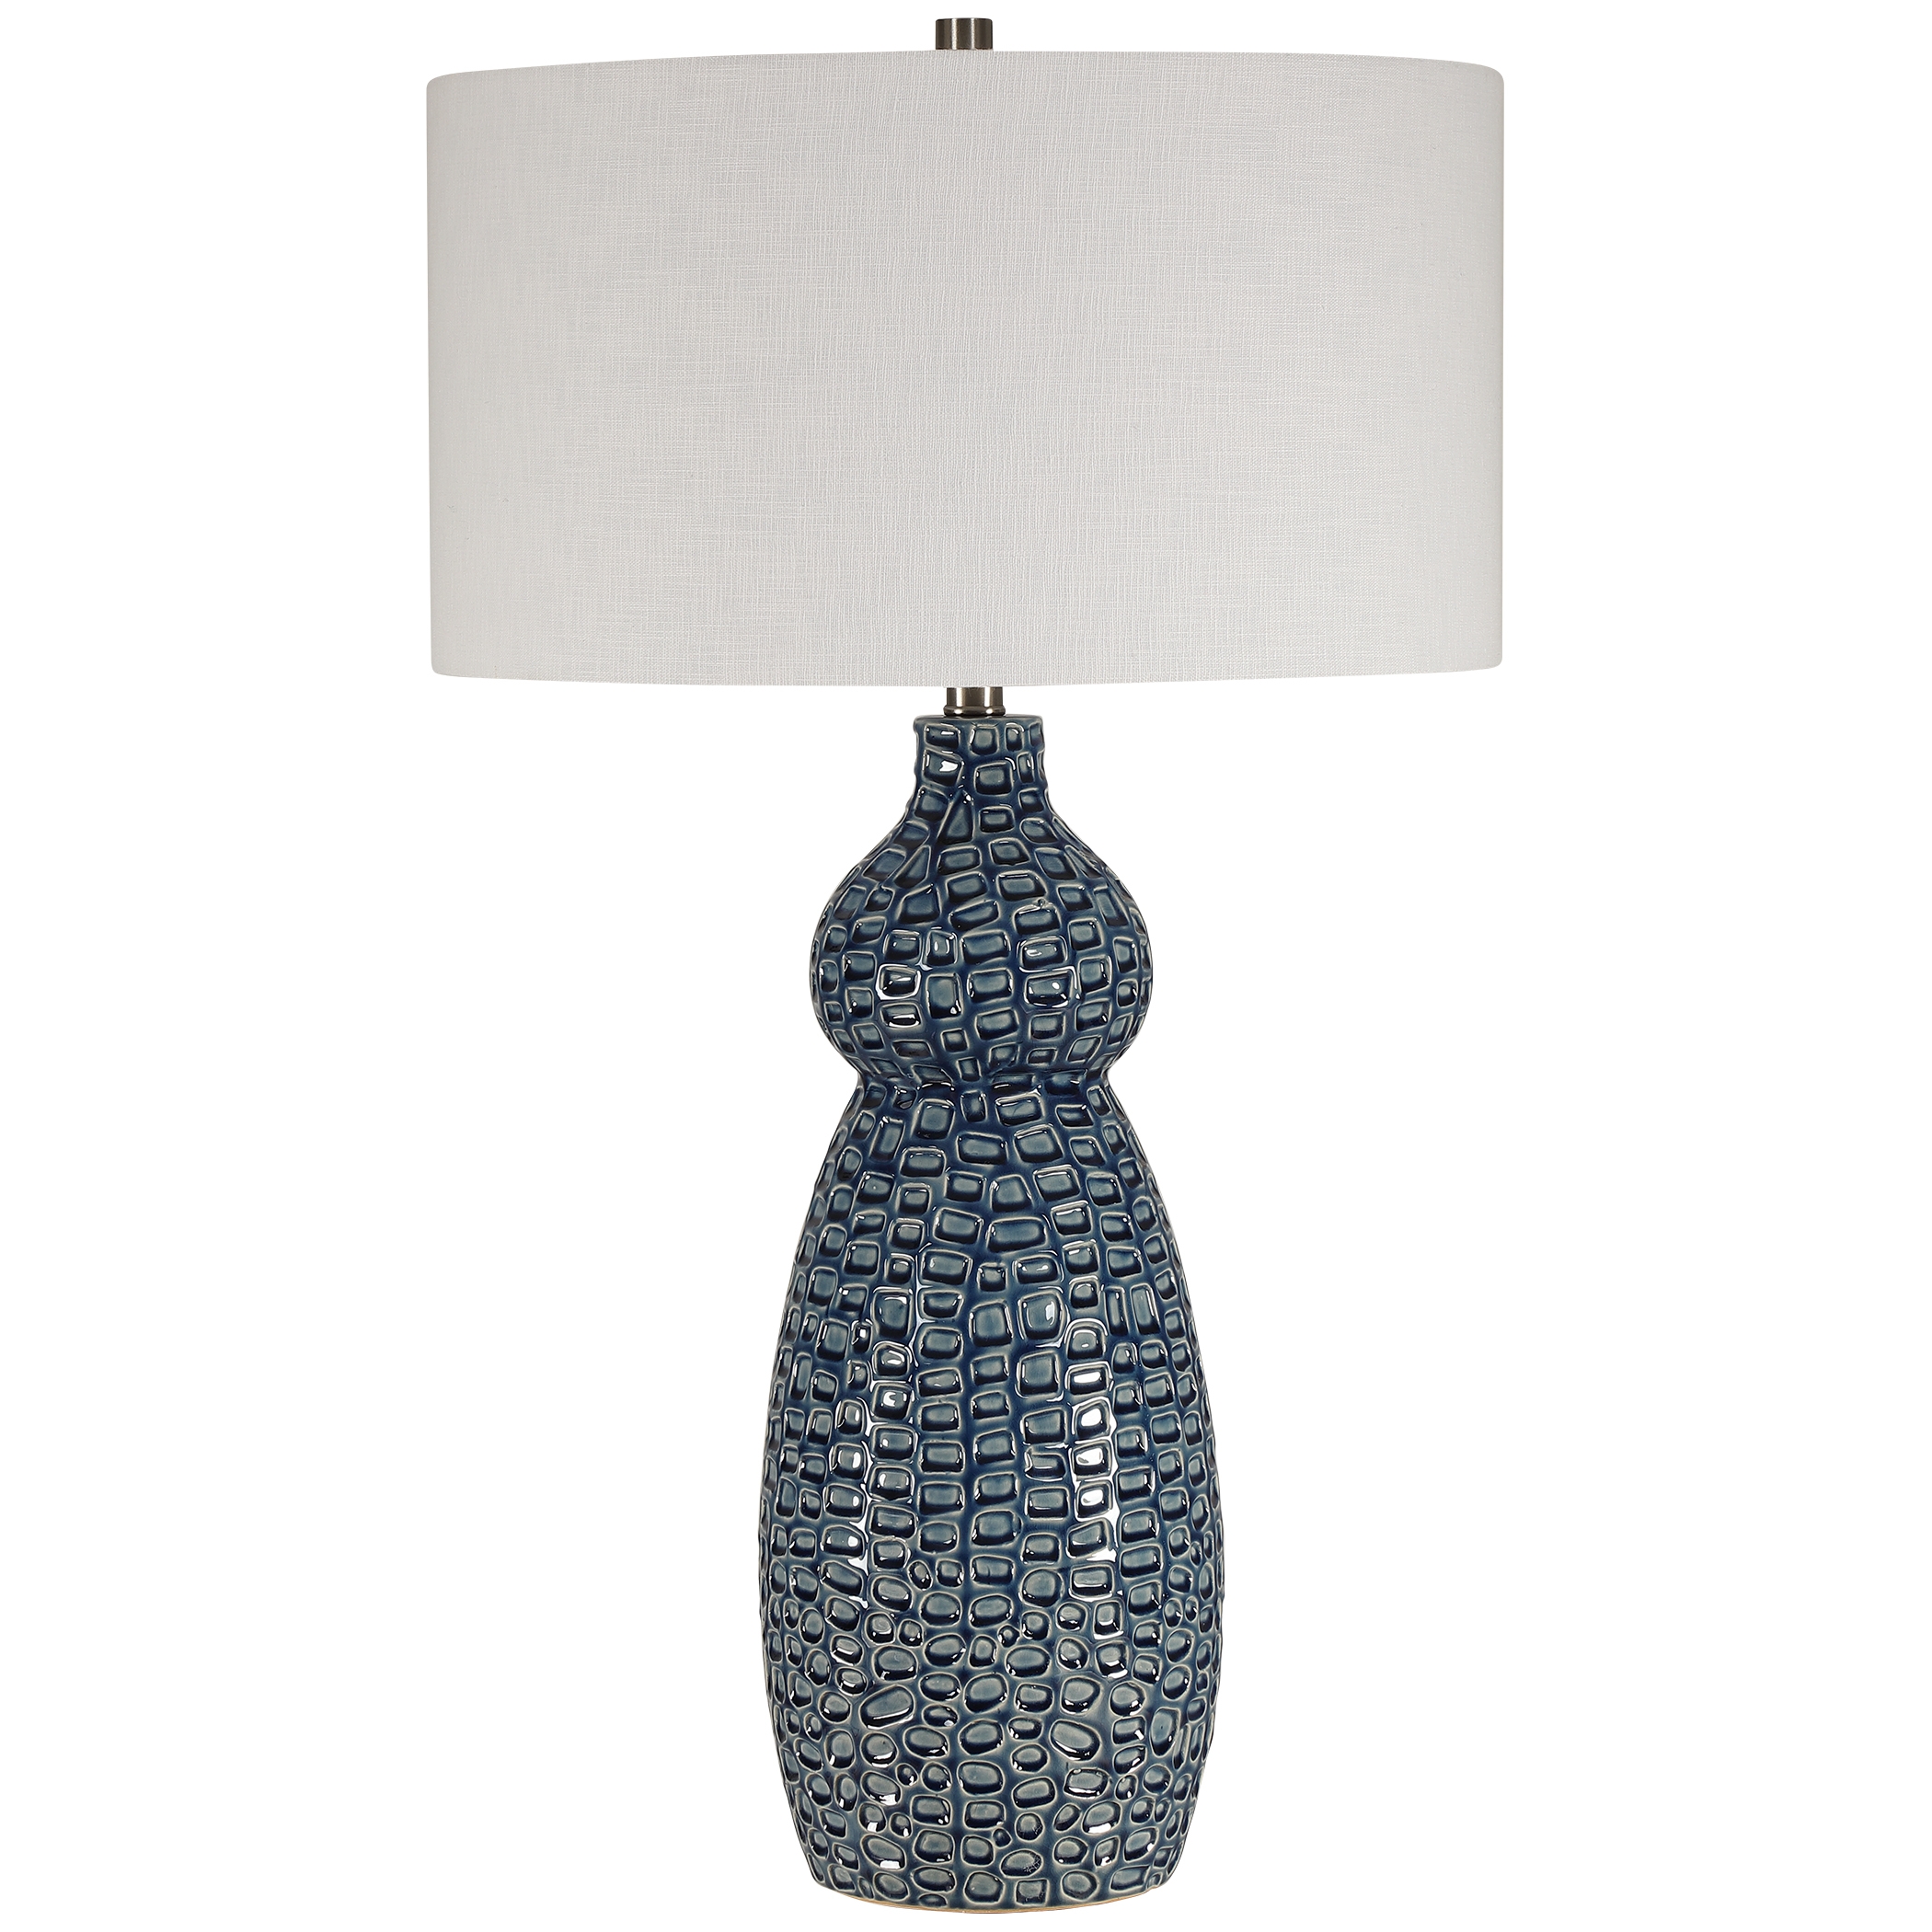 Holloway Cobalt Blue Table Lamp - Image 2